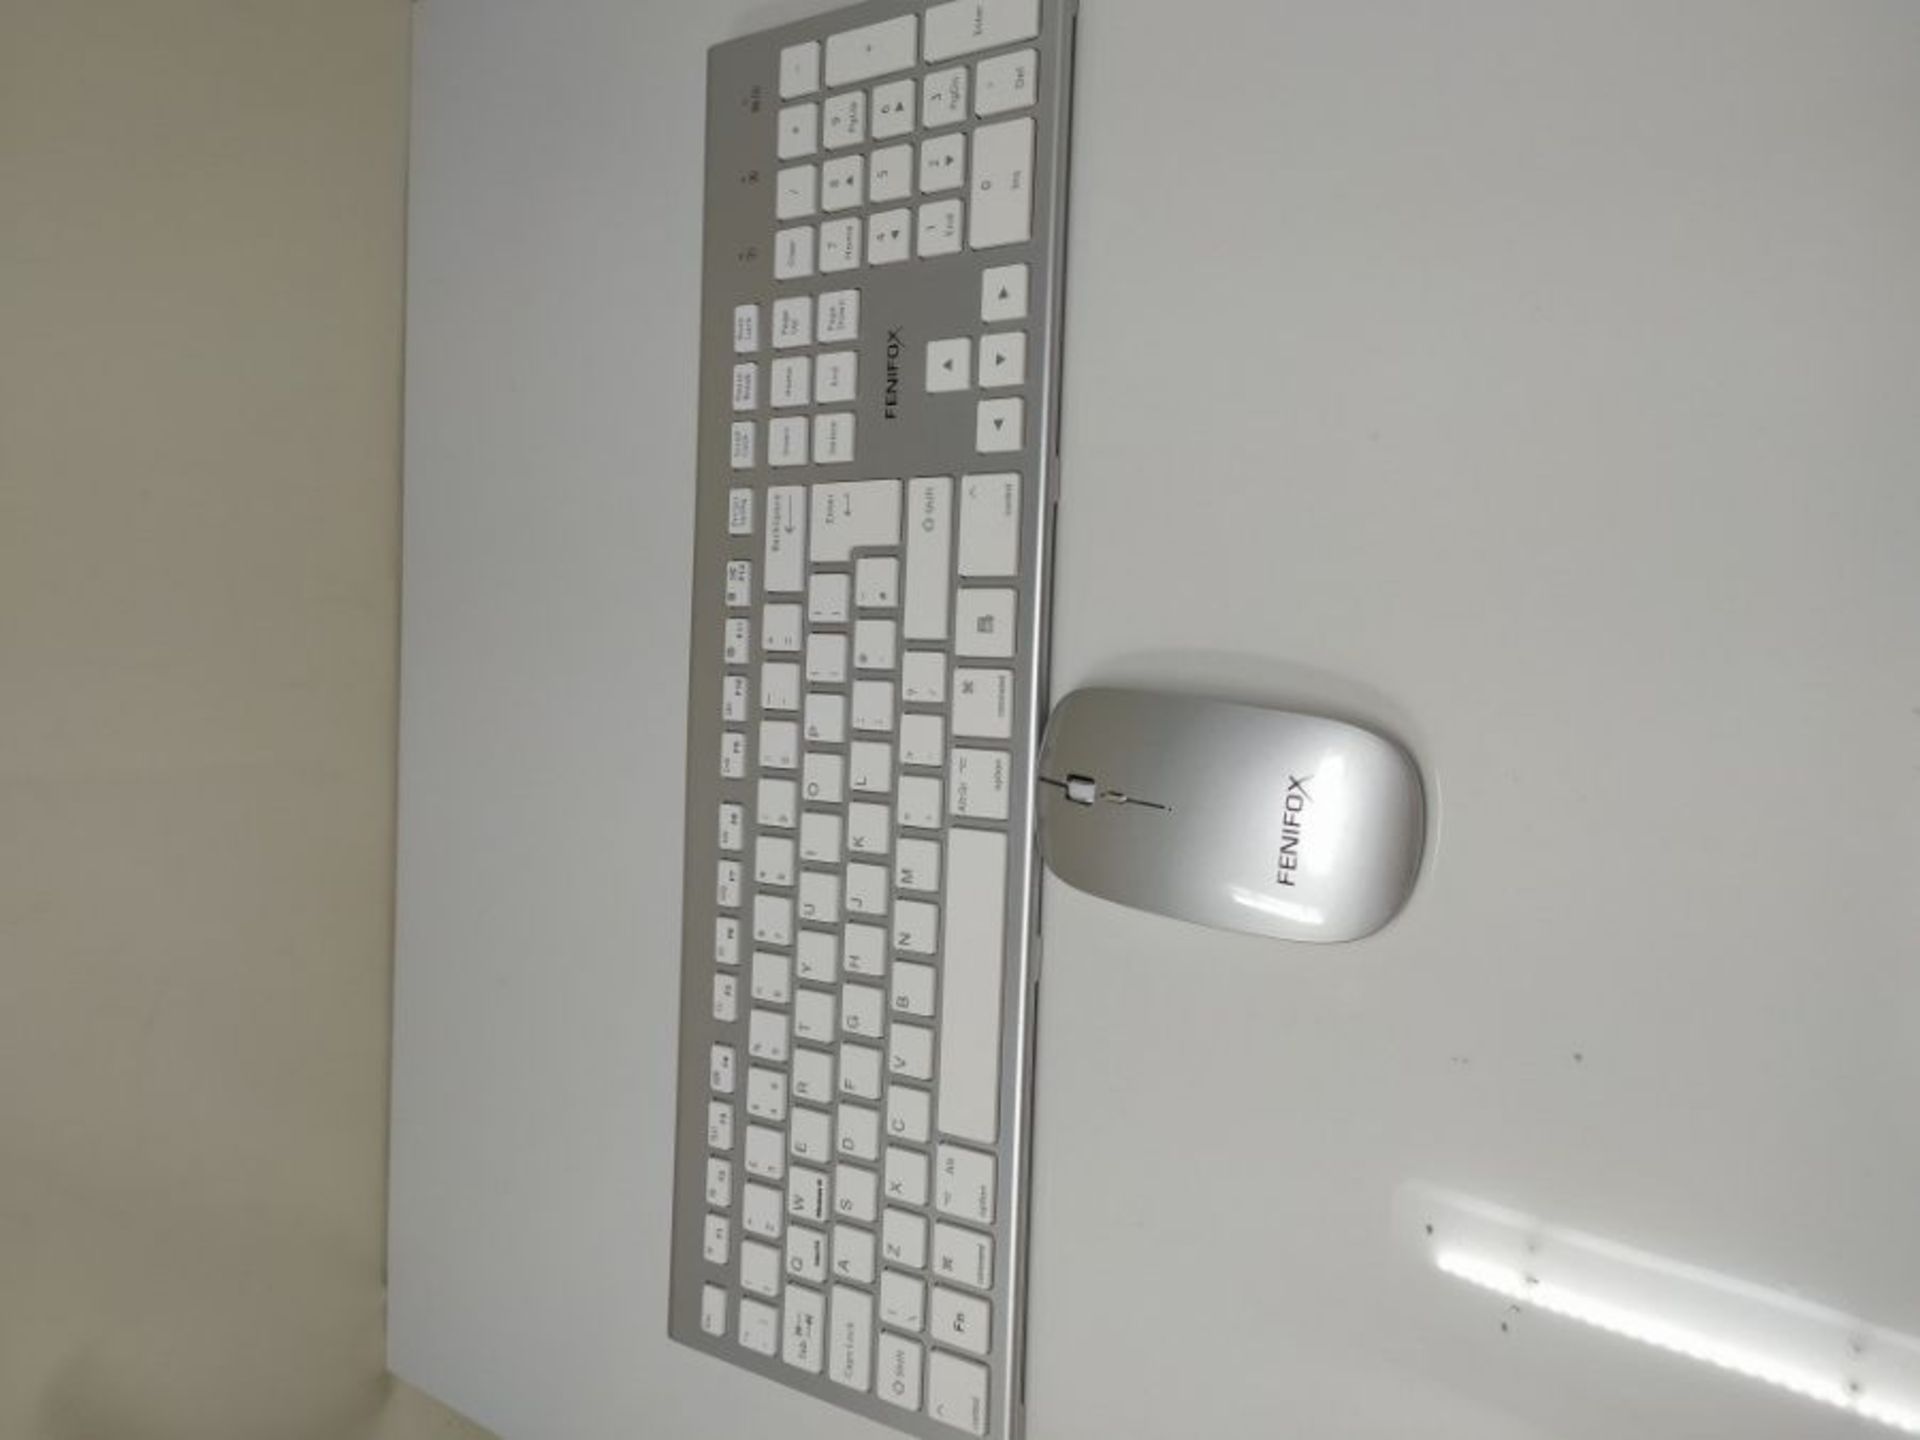 FENIFOX Wireless Keyboard & Mouse Set, Dual System Switching Ergonomic 2.4G USB QWERTY - Image 2 of 2